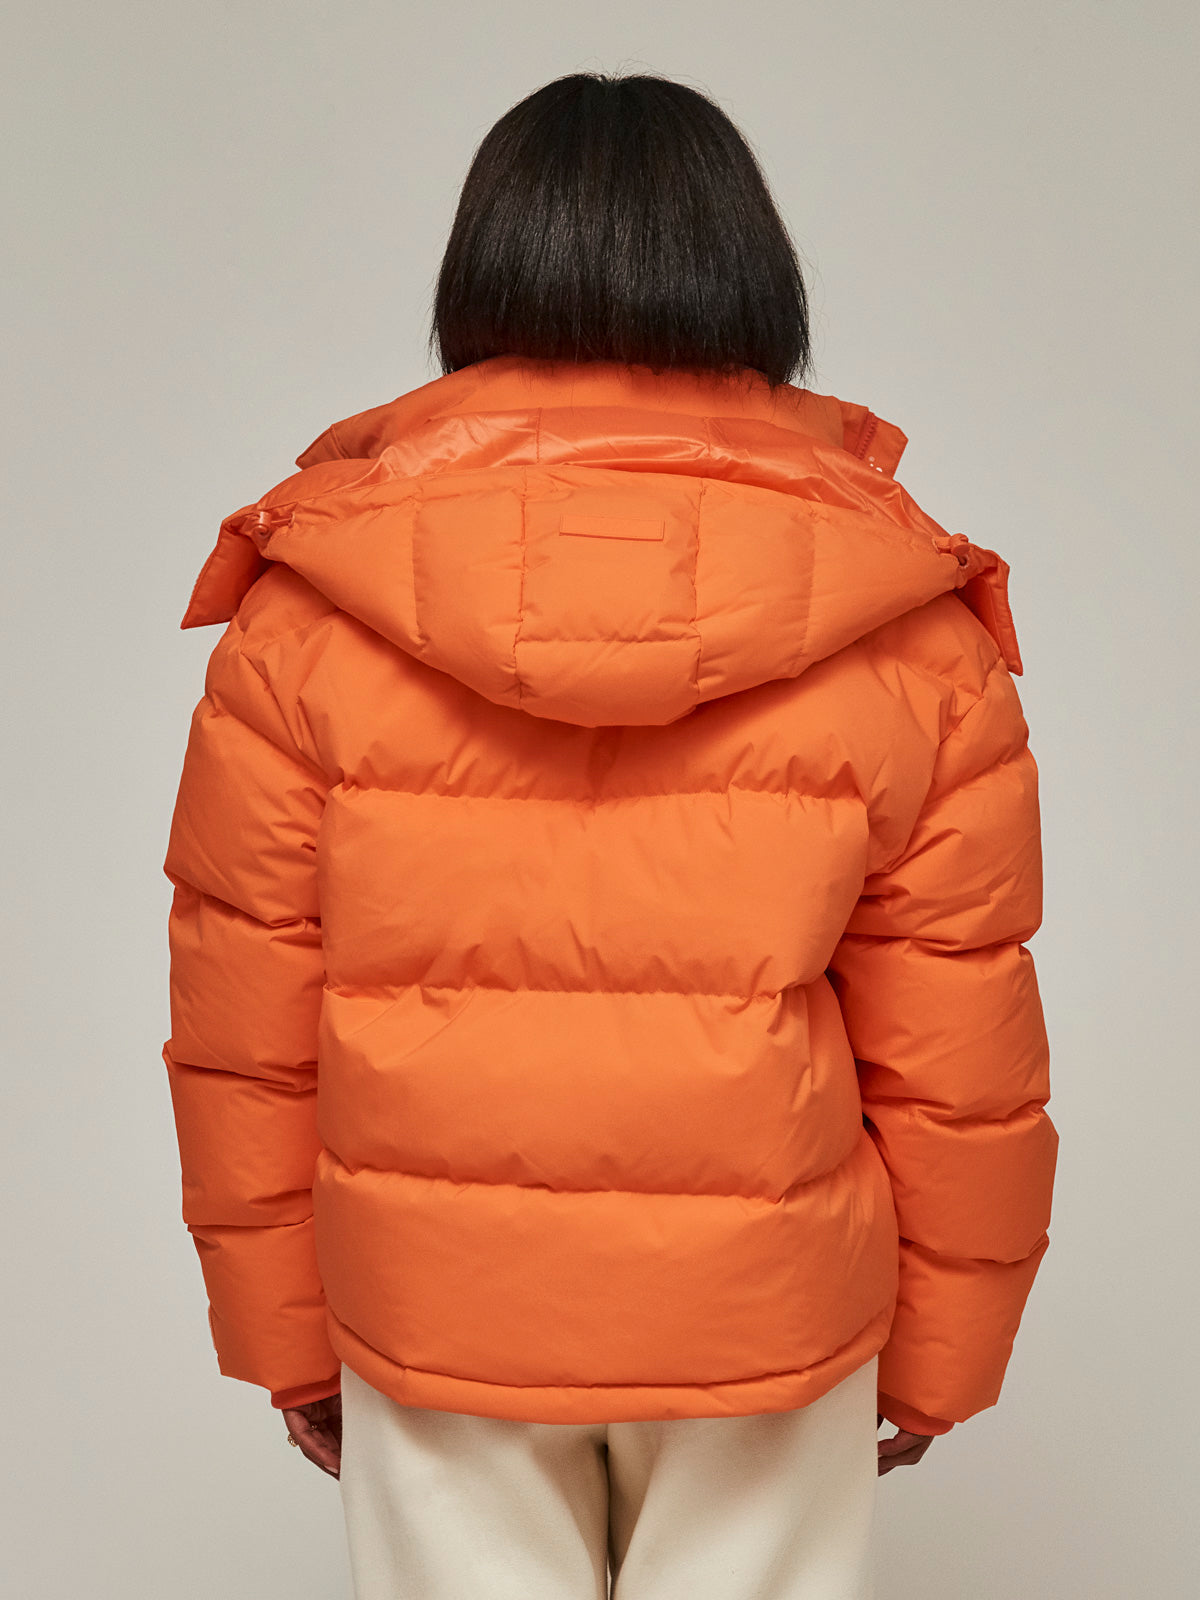 Odd Orange Puffer Jacket/ LMTD edition